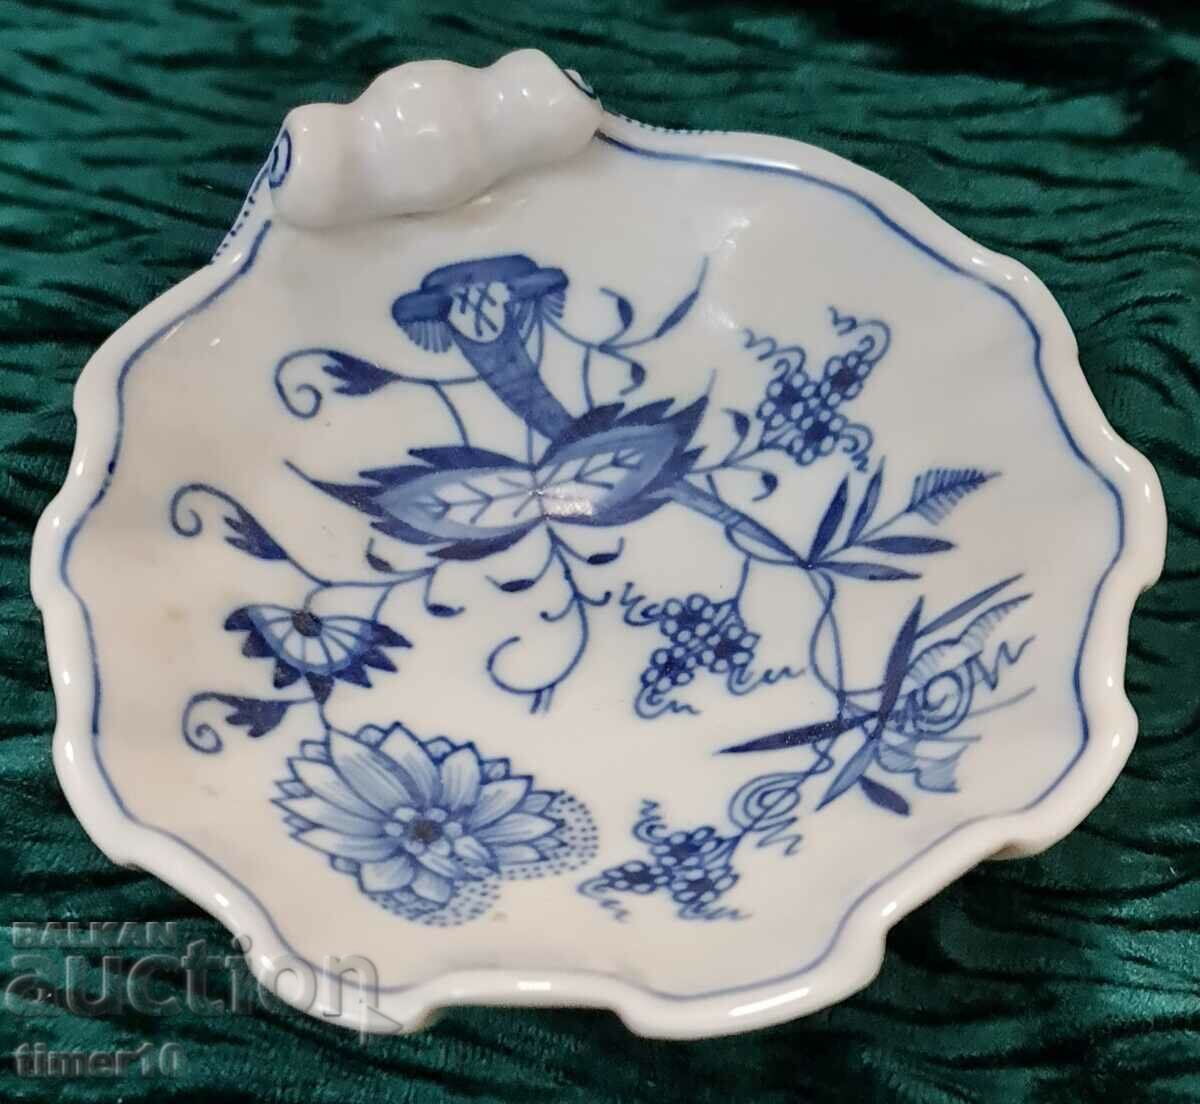 Meissen porcelain "BLUE ONION" Marked shell plate